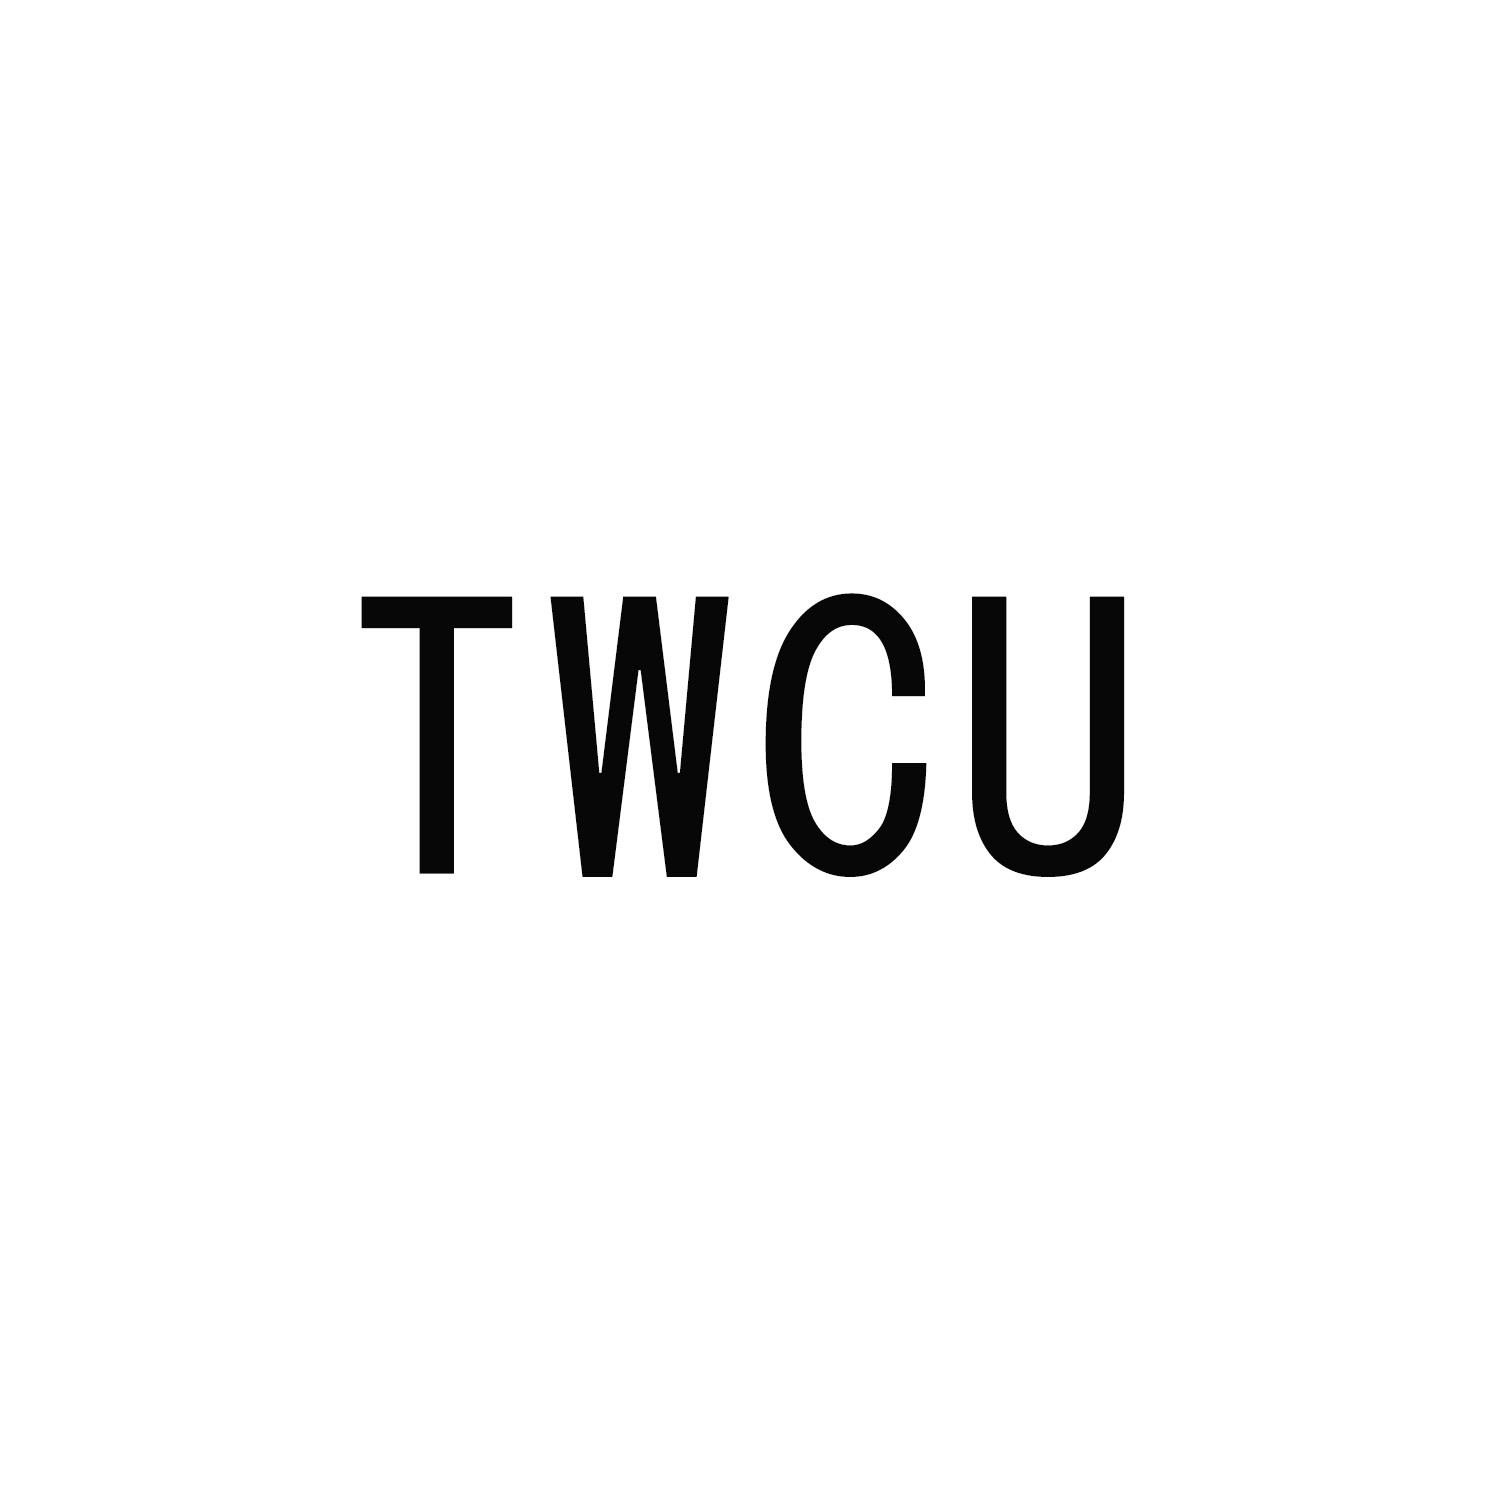 TWCU